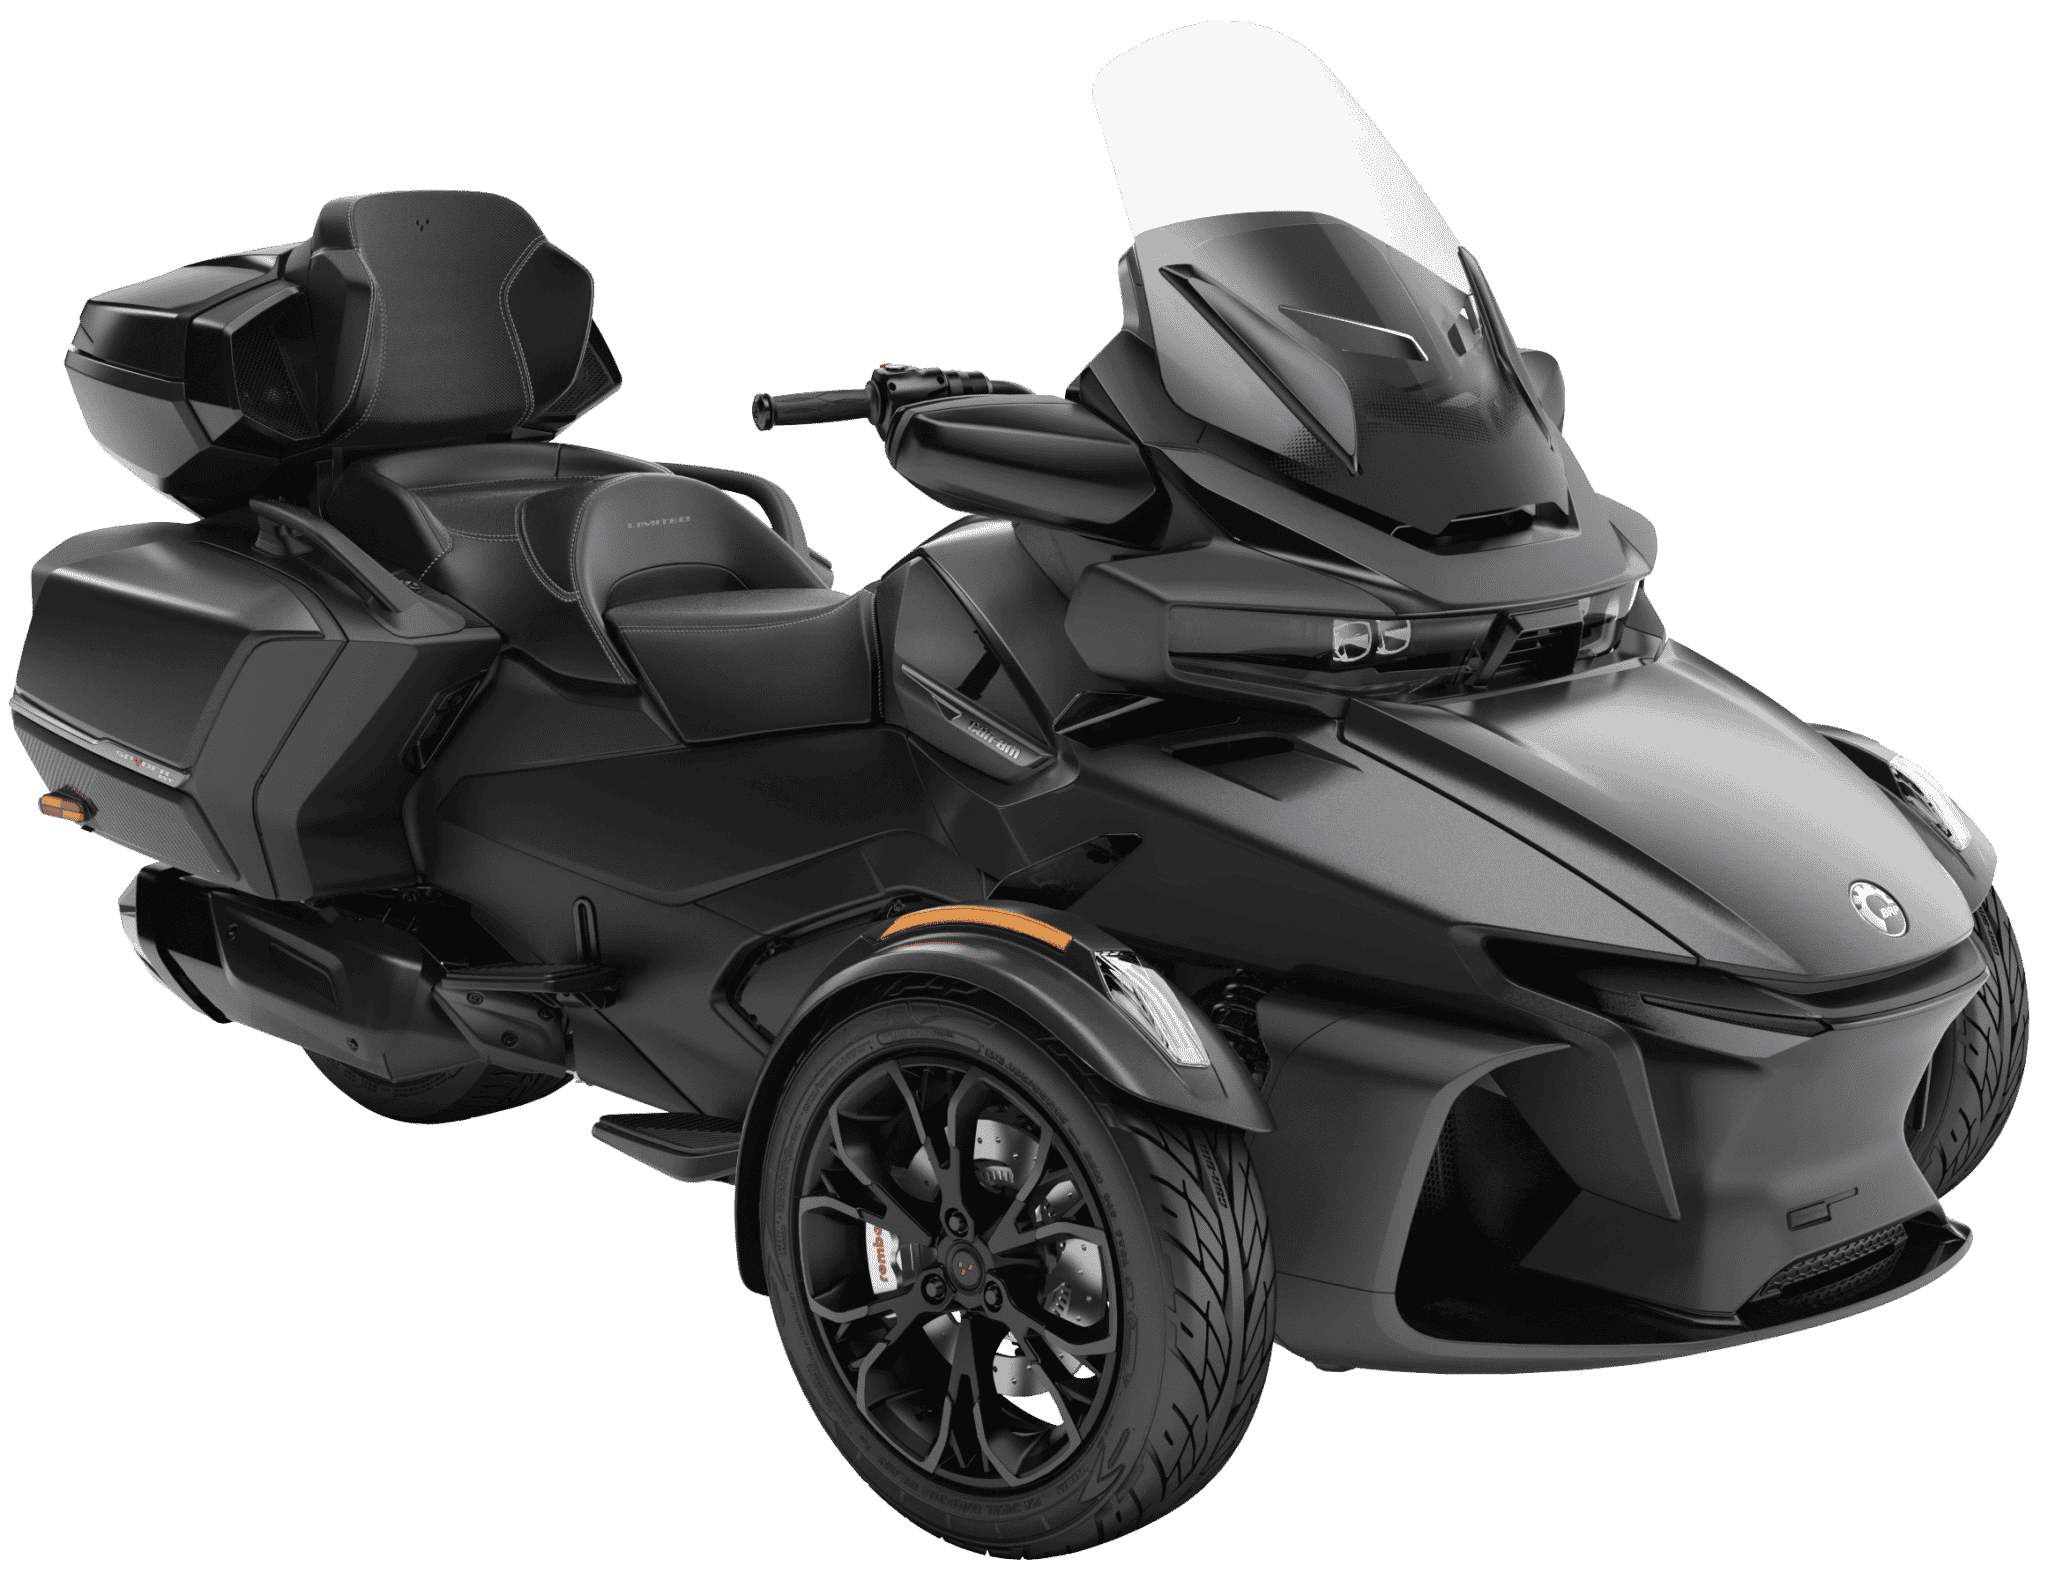 Nuevo Can-Am Spyder RT 2022 negro